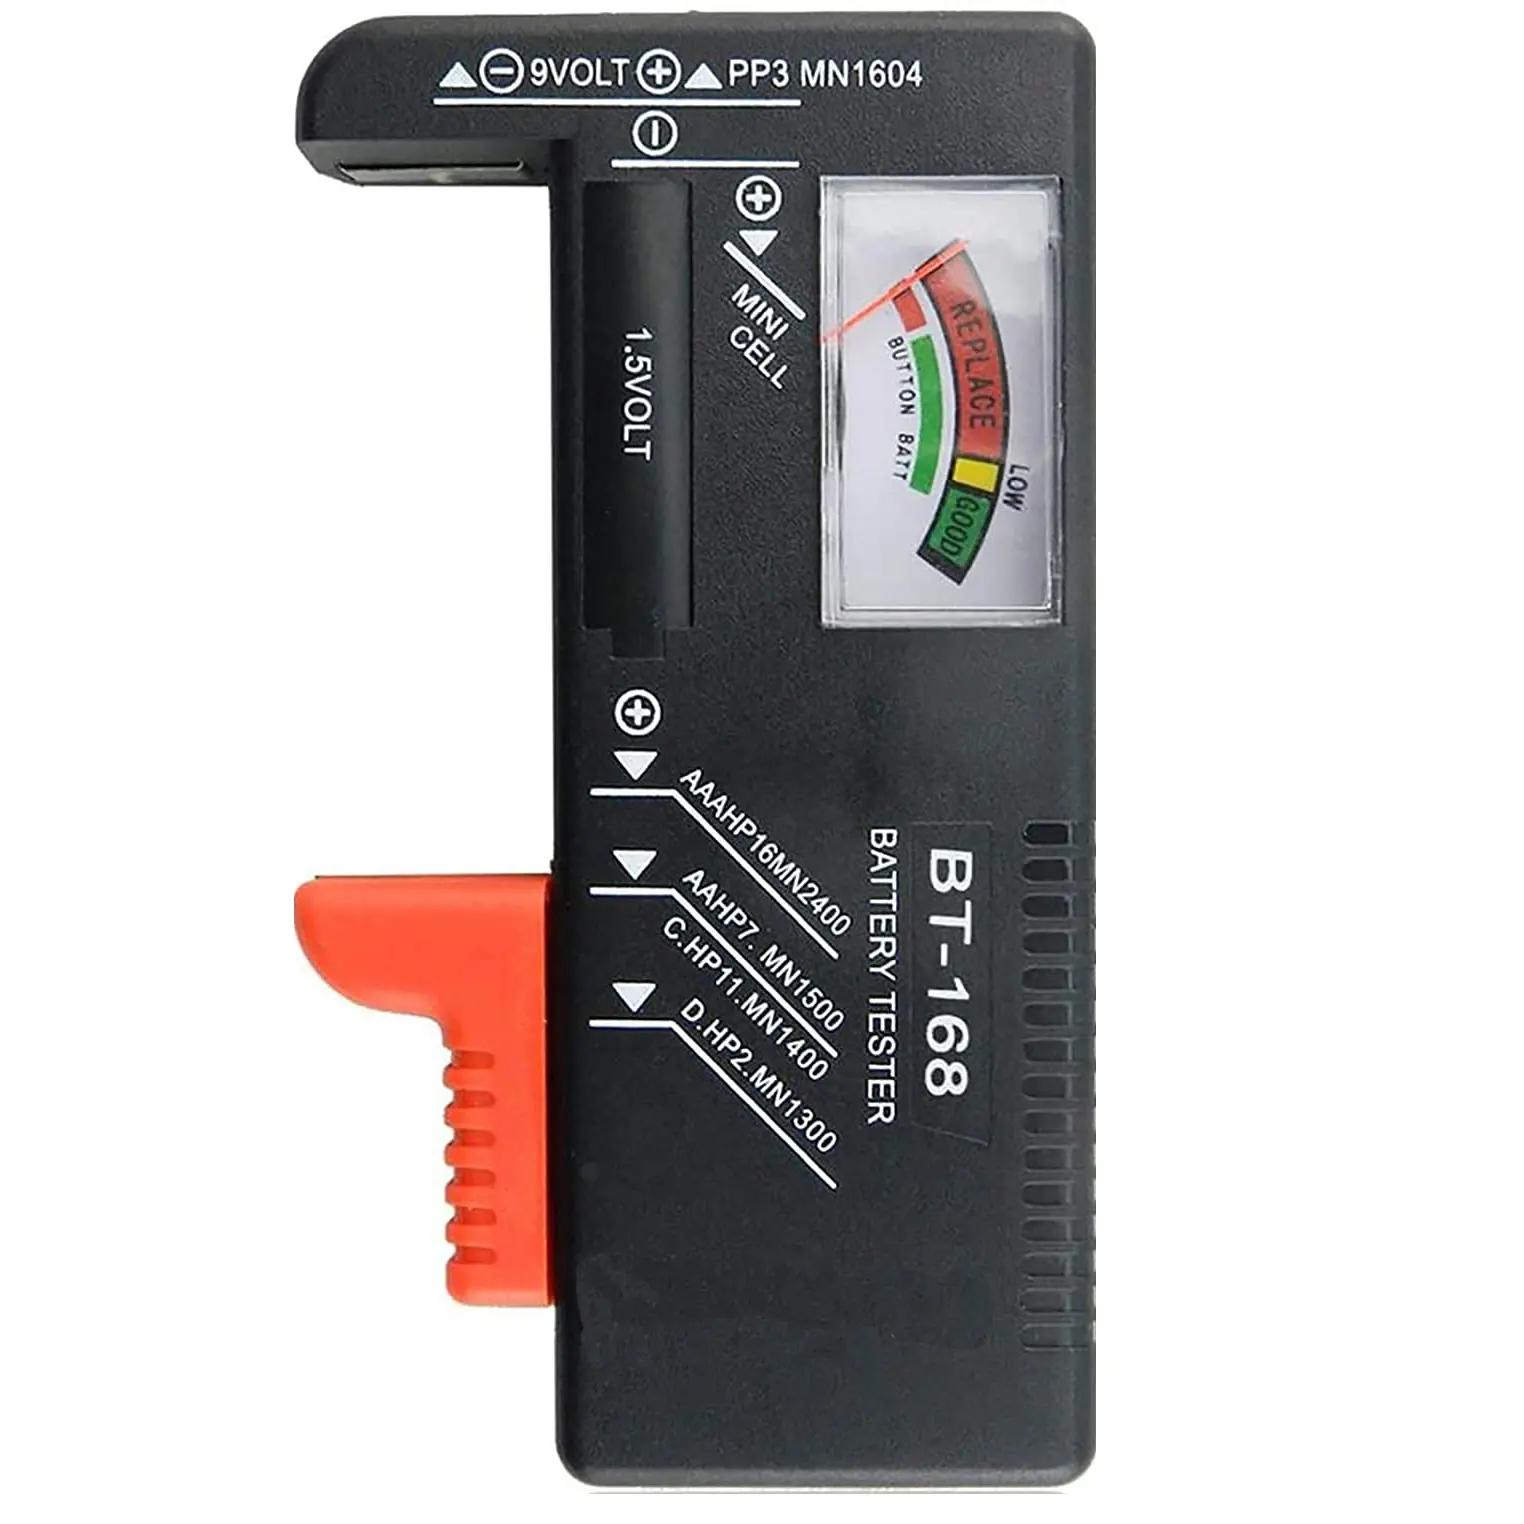 Verificador universal de bateria, testador de bateria para baterias domésticas aaa aa c d 9v 1.5v